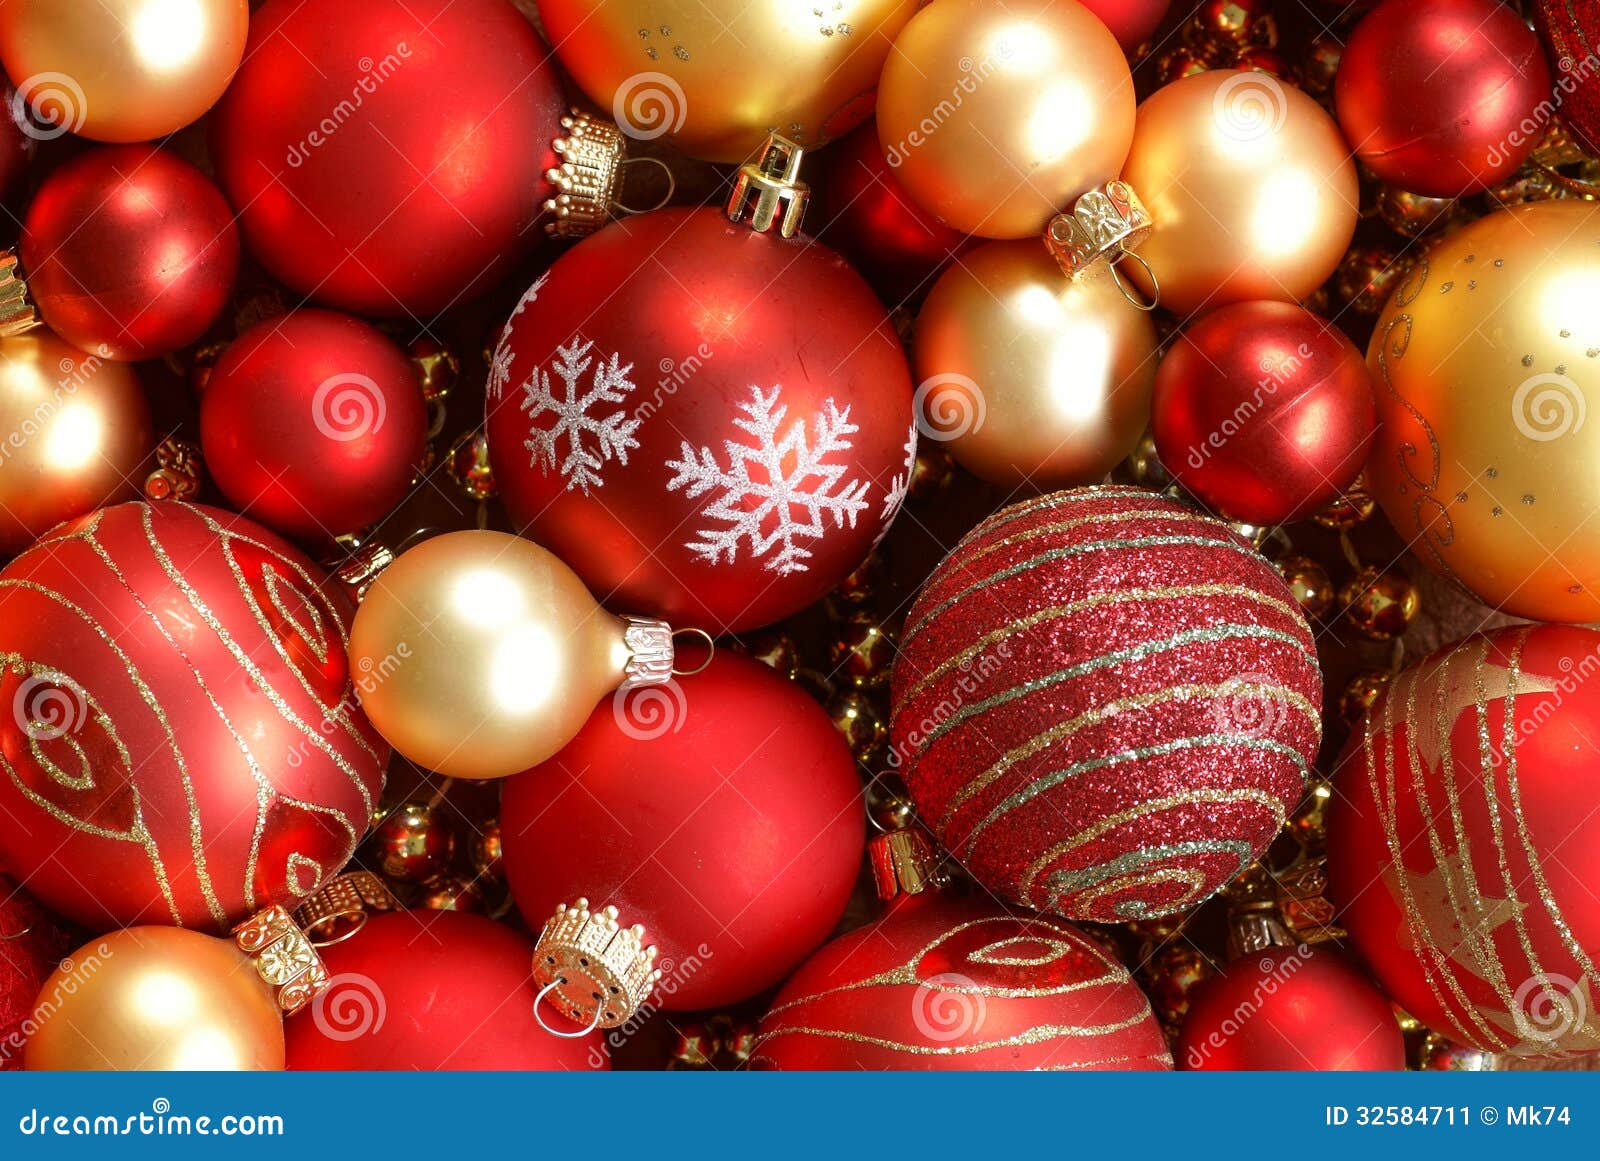 Christmas ornaments stock image. Image of symbol, decoration - 32584711